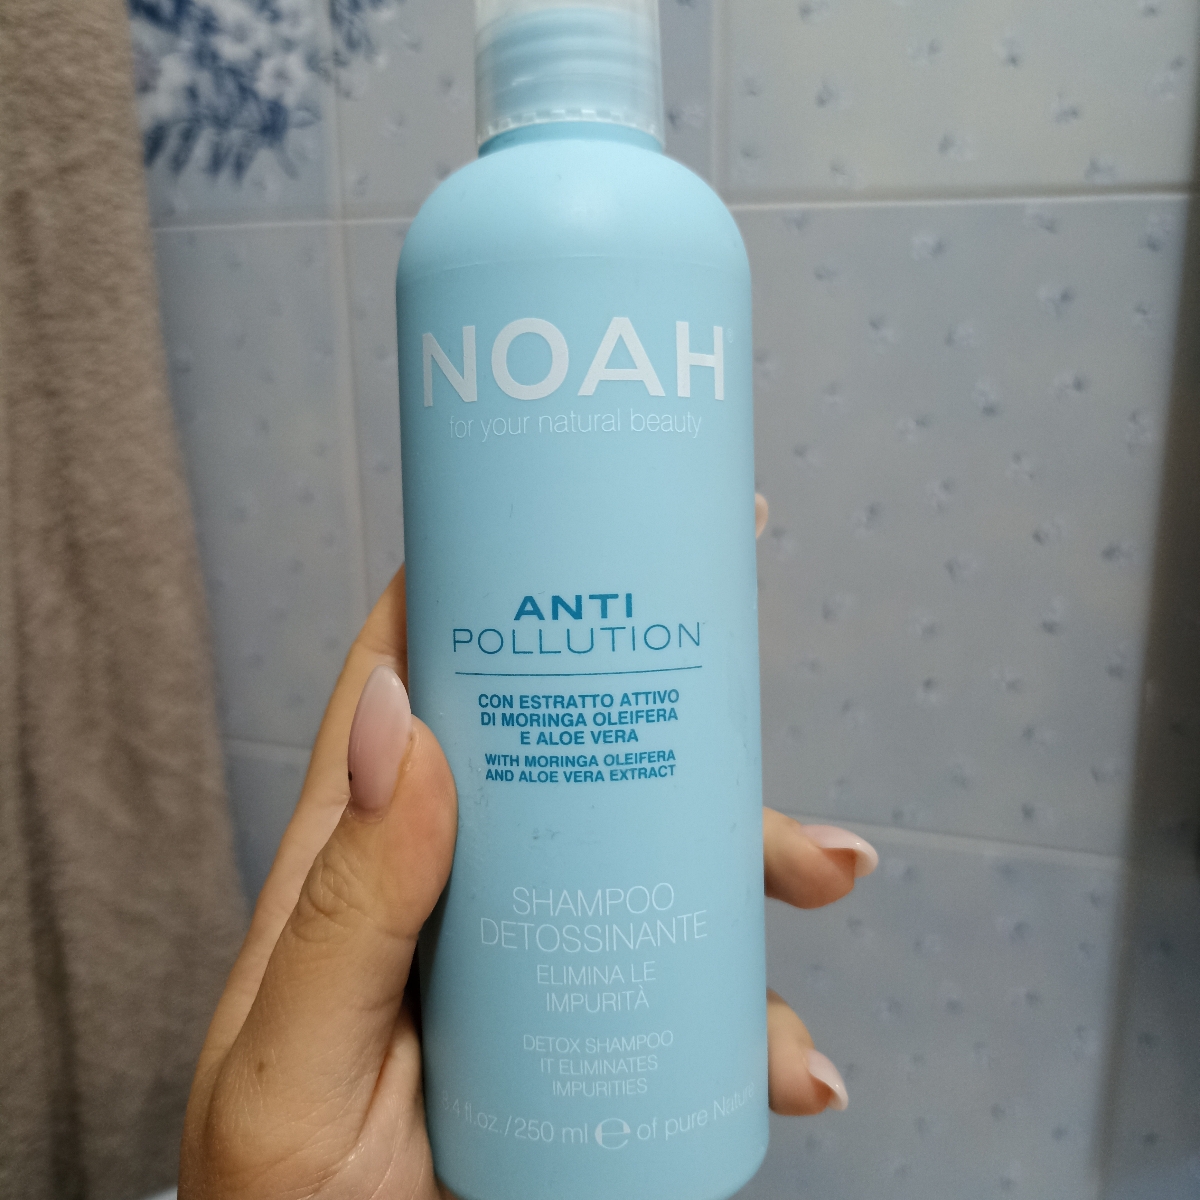 NOAH Anti pollution shampoo detossinante Review | abillion